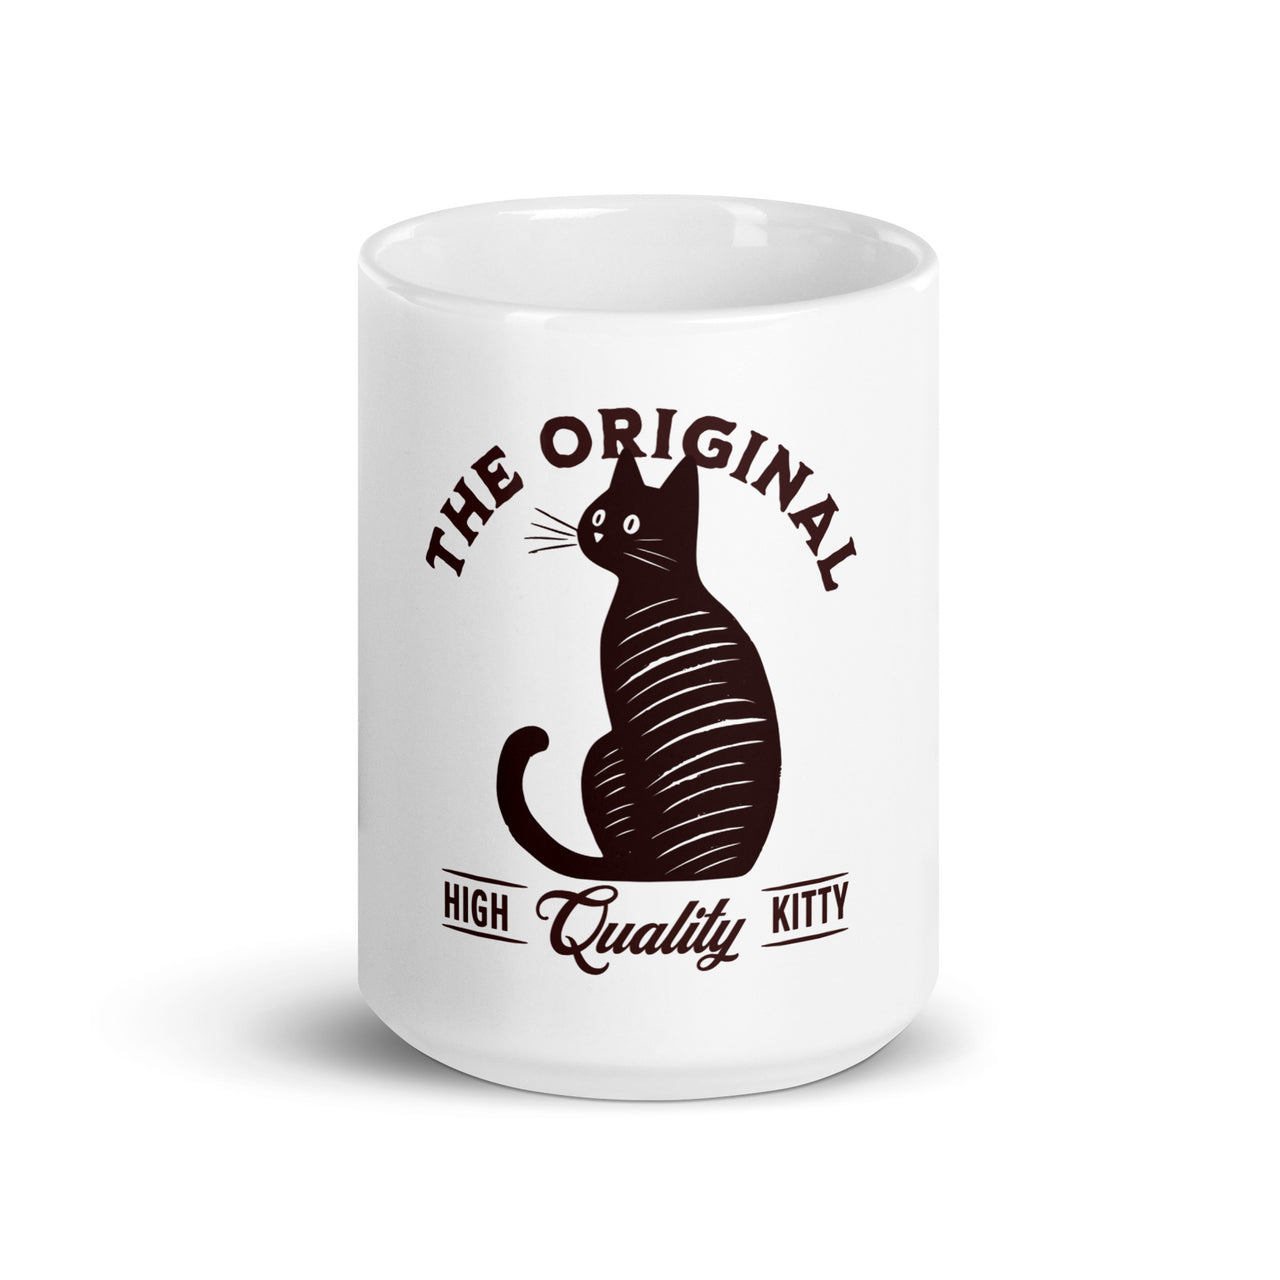 The Original High Quality Kitty White Mug